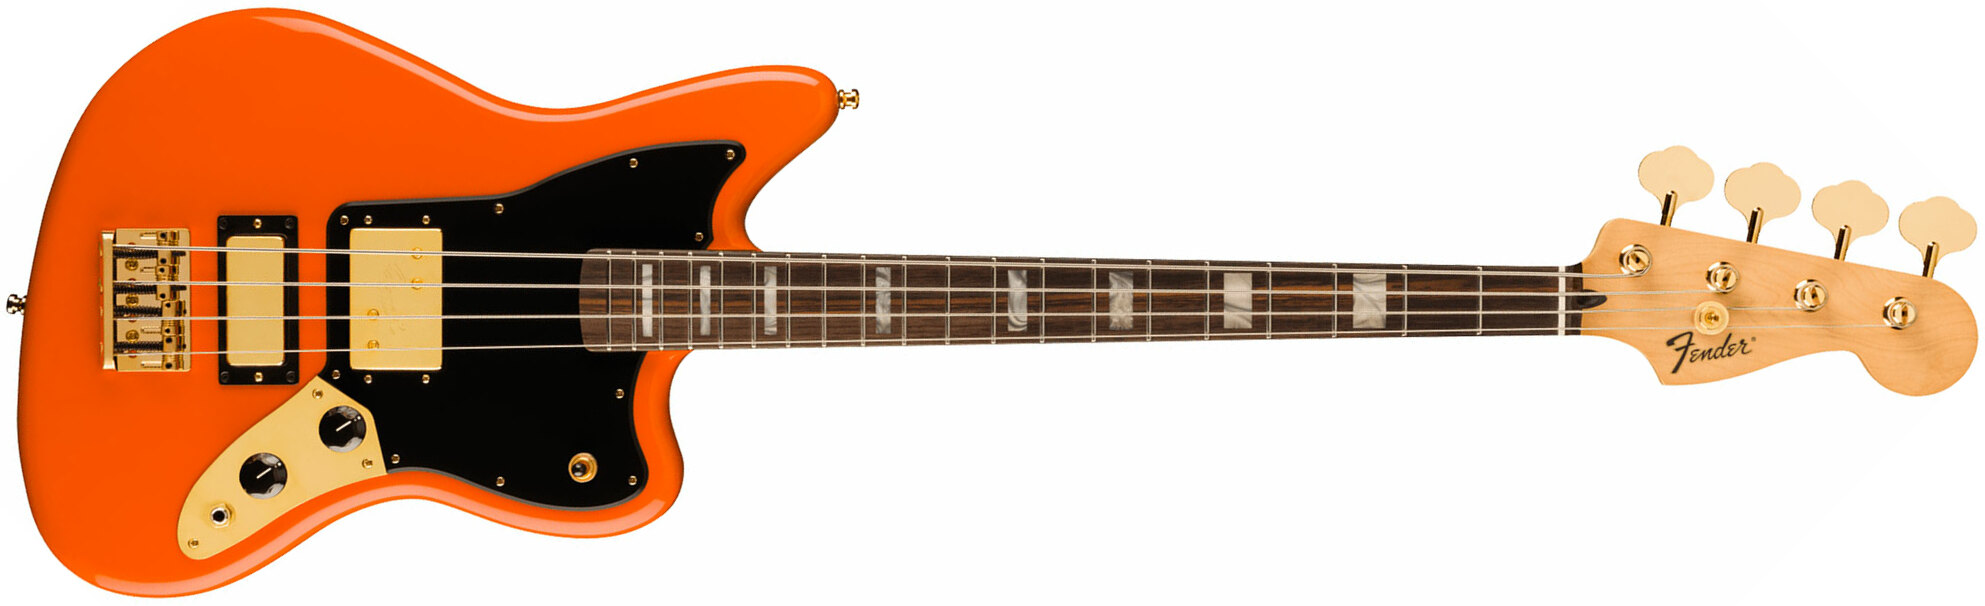 Fender Mike Kerr Jaguar Ltd Mex Signature Rw - Tiger's Blood Orange - Solid body elektrische bas - Main picture